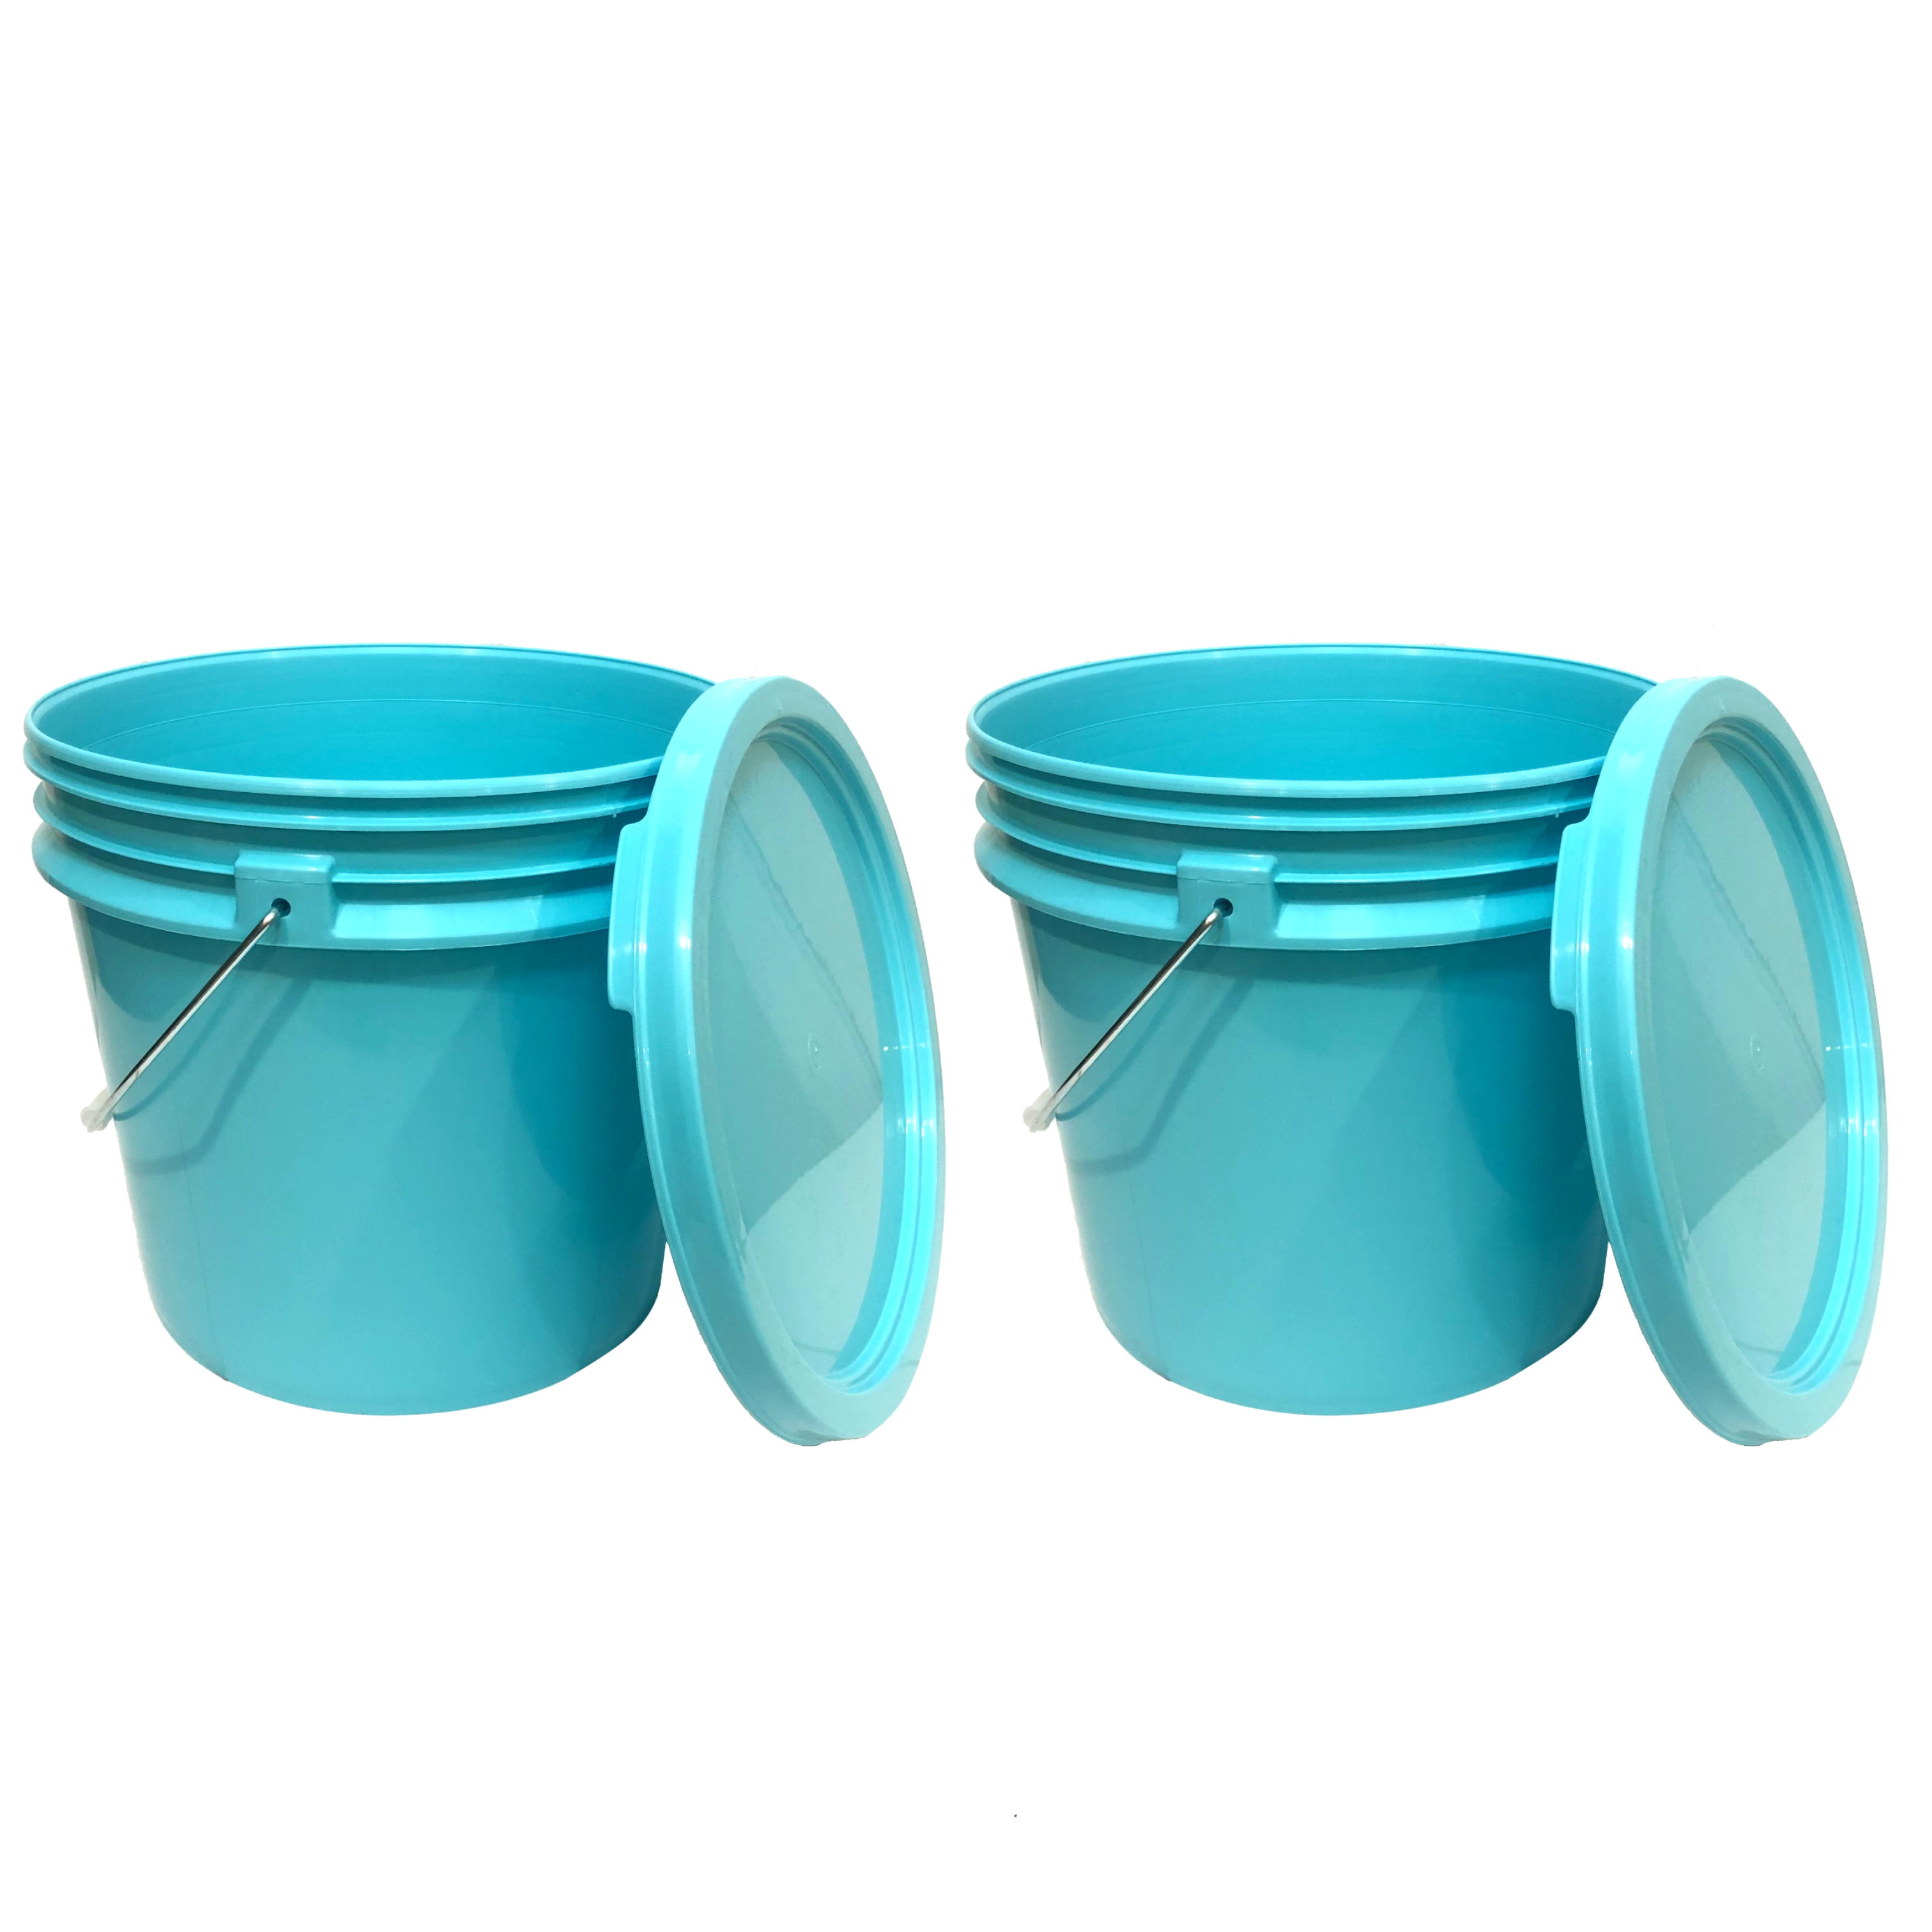 ISMART 5 Gallon bucket-Premium Series Detailing Kit-5 G. ISMART bucket –  Lee Fisher Fishing Supply